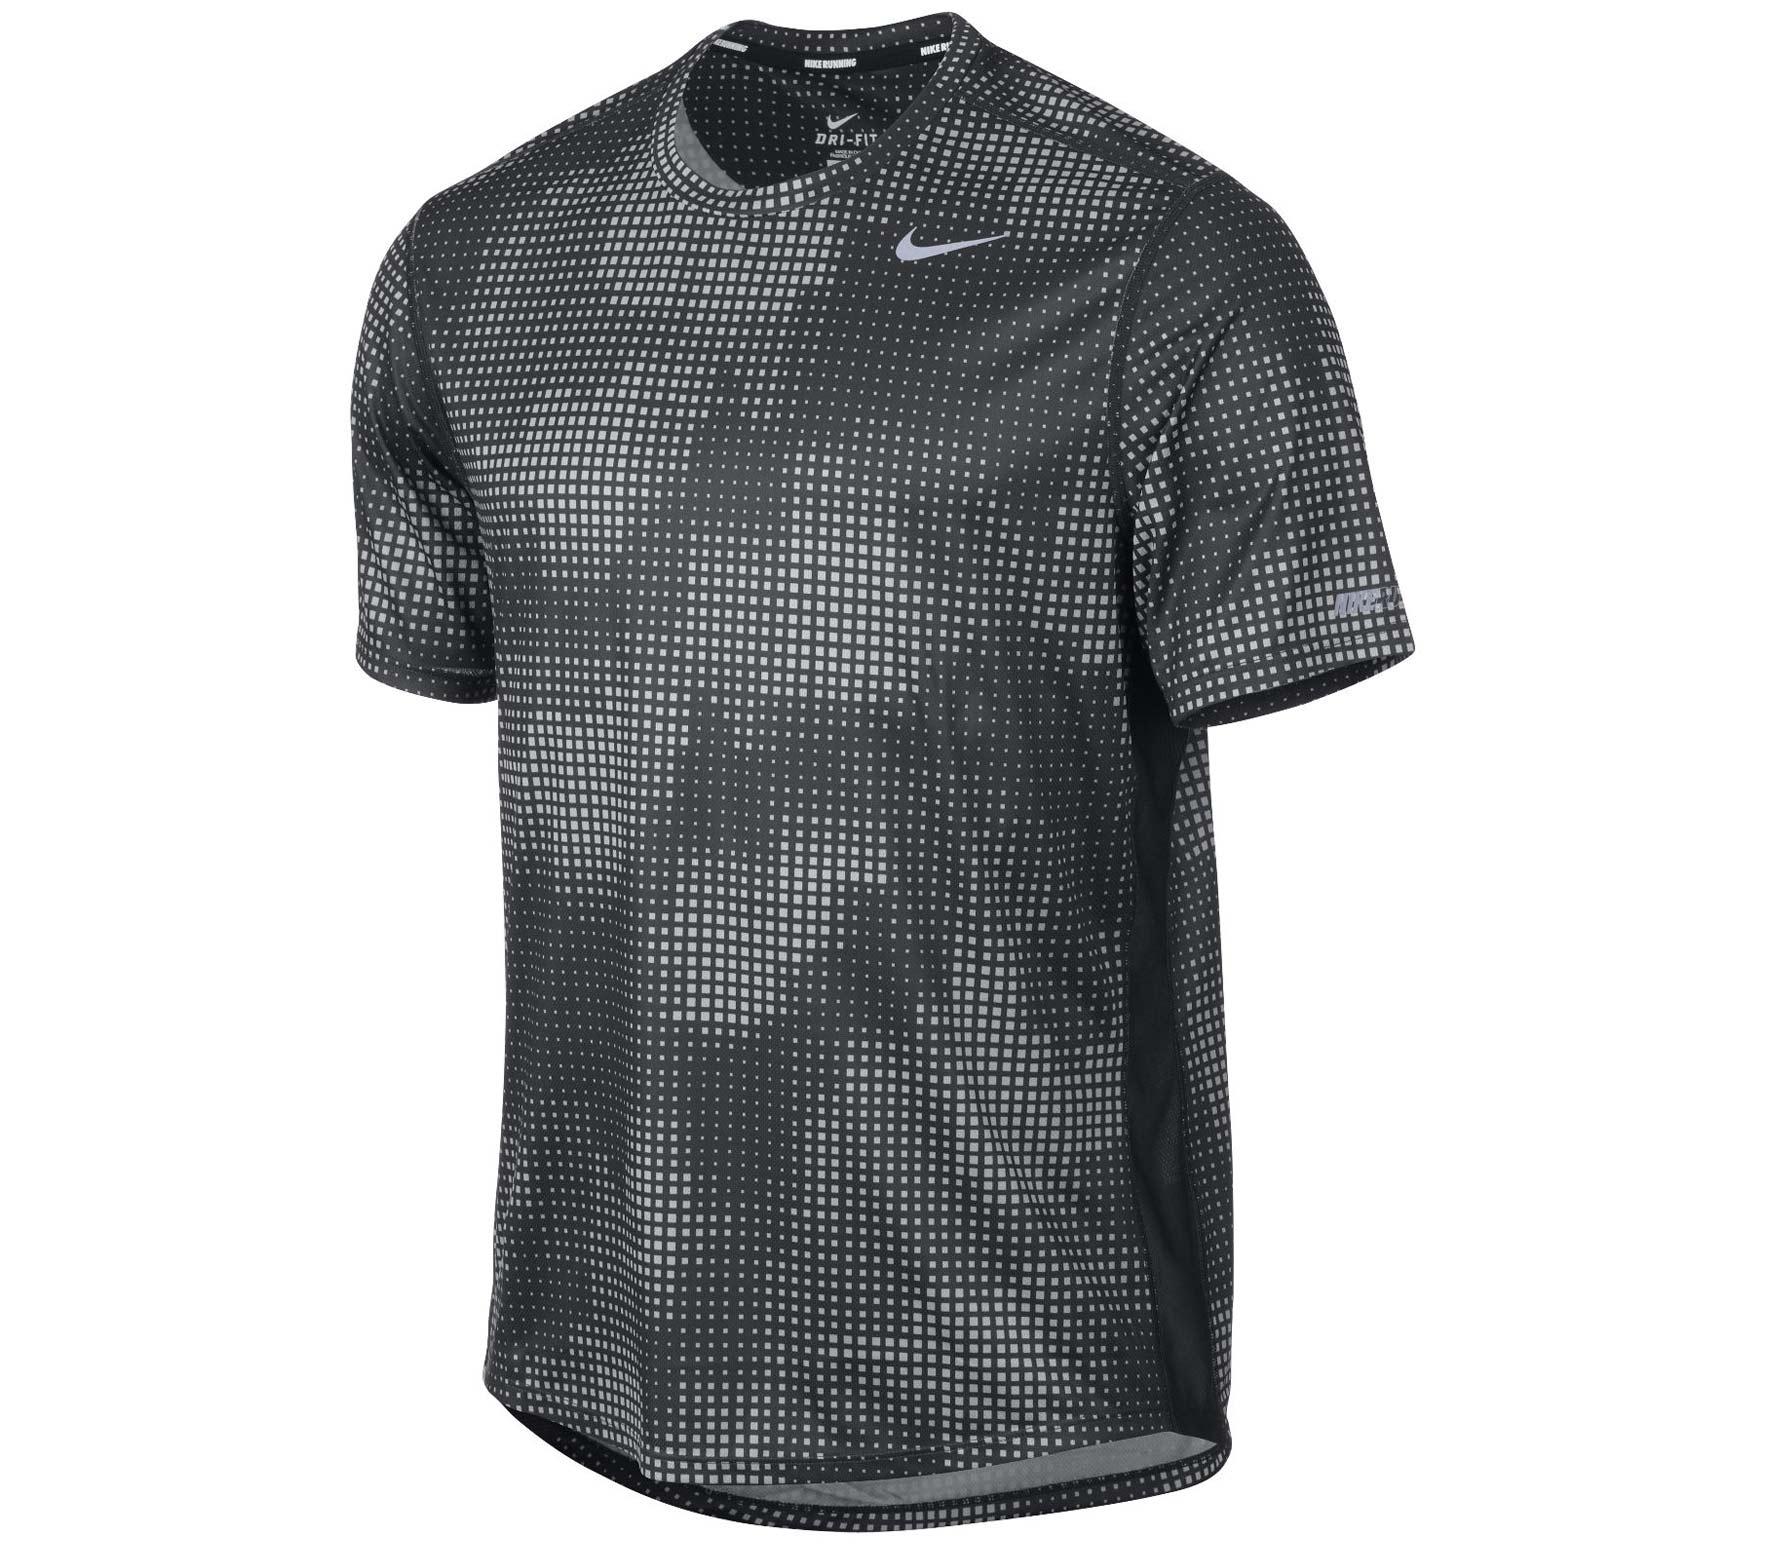 Foto Nike - Camiseta Hombre Sublimated - SP13